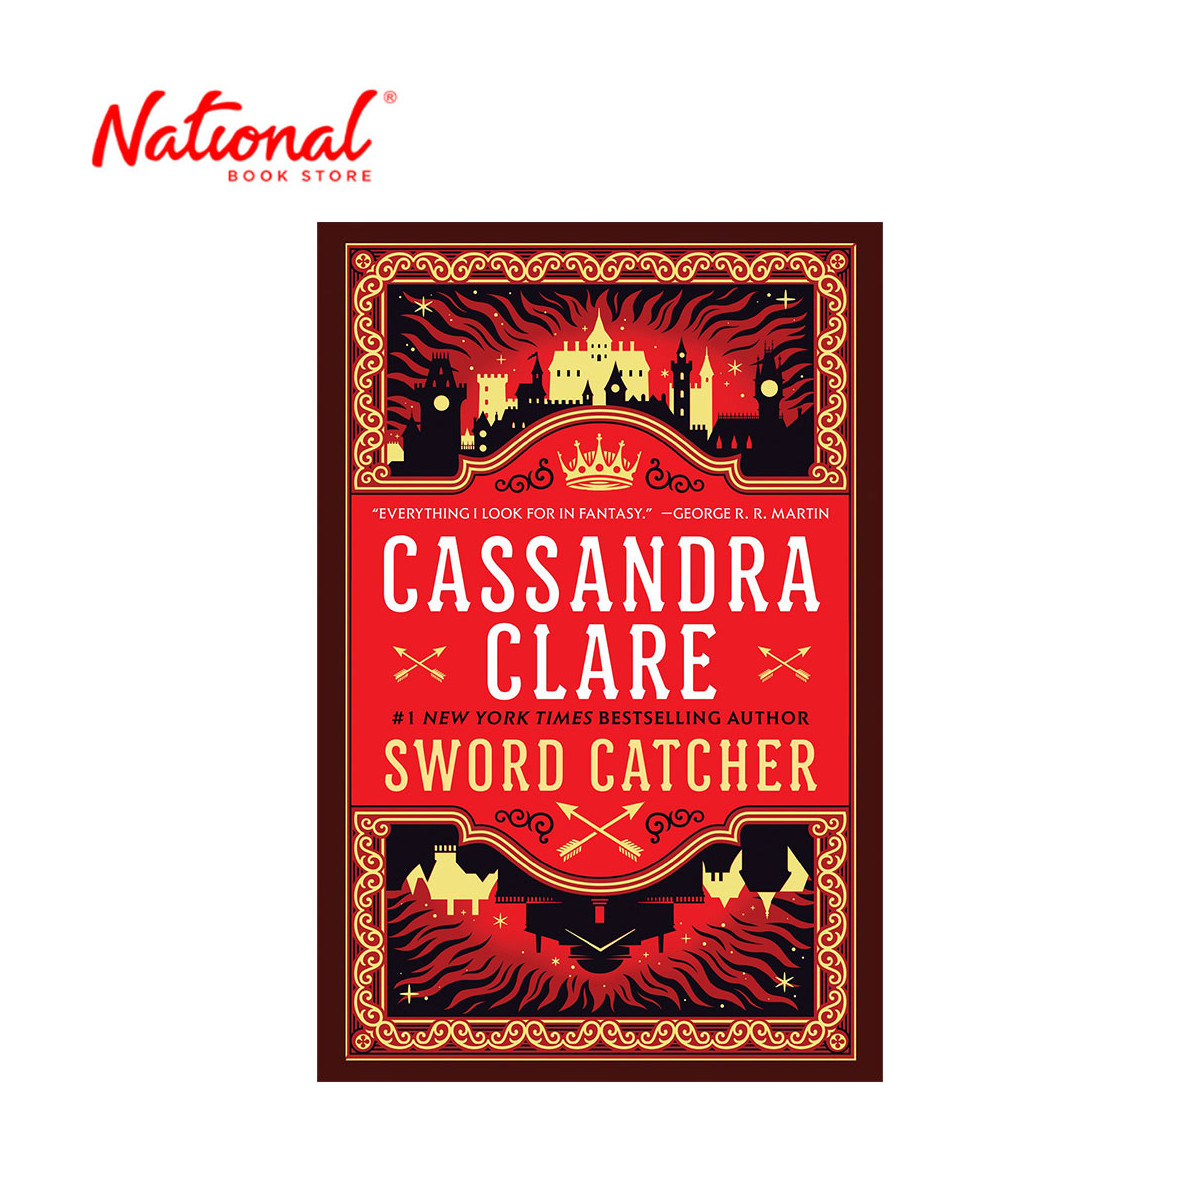 Sword Catcher by Cassandra Clare - Trade Paperback - Sci-Fi, Fantasy & Horror